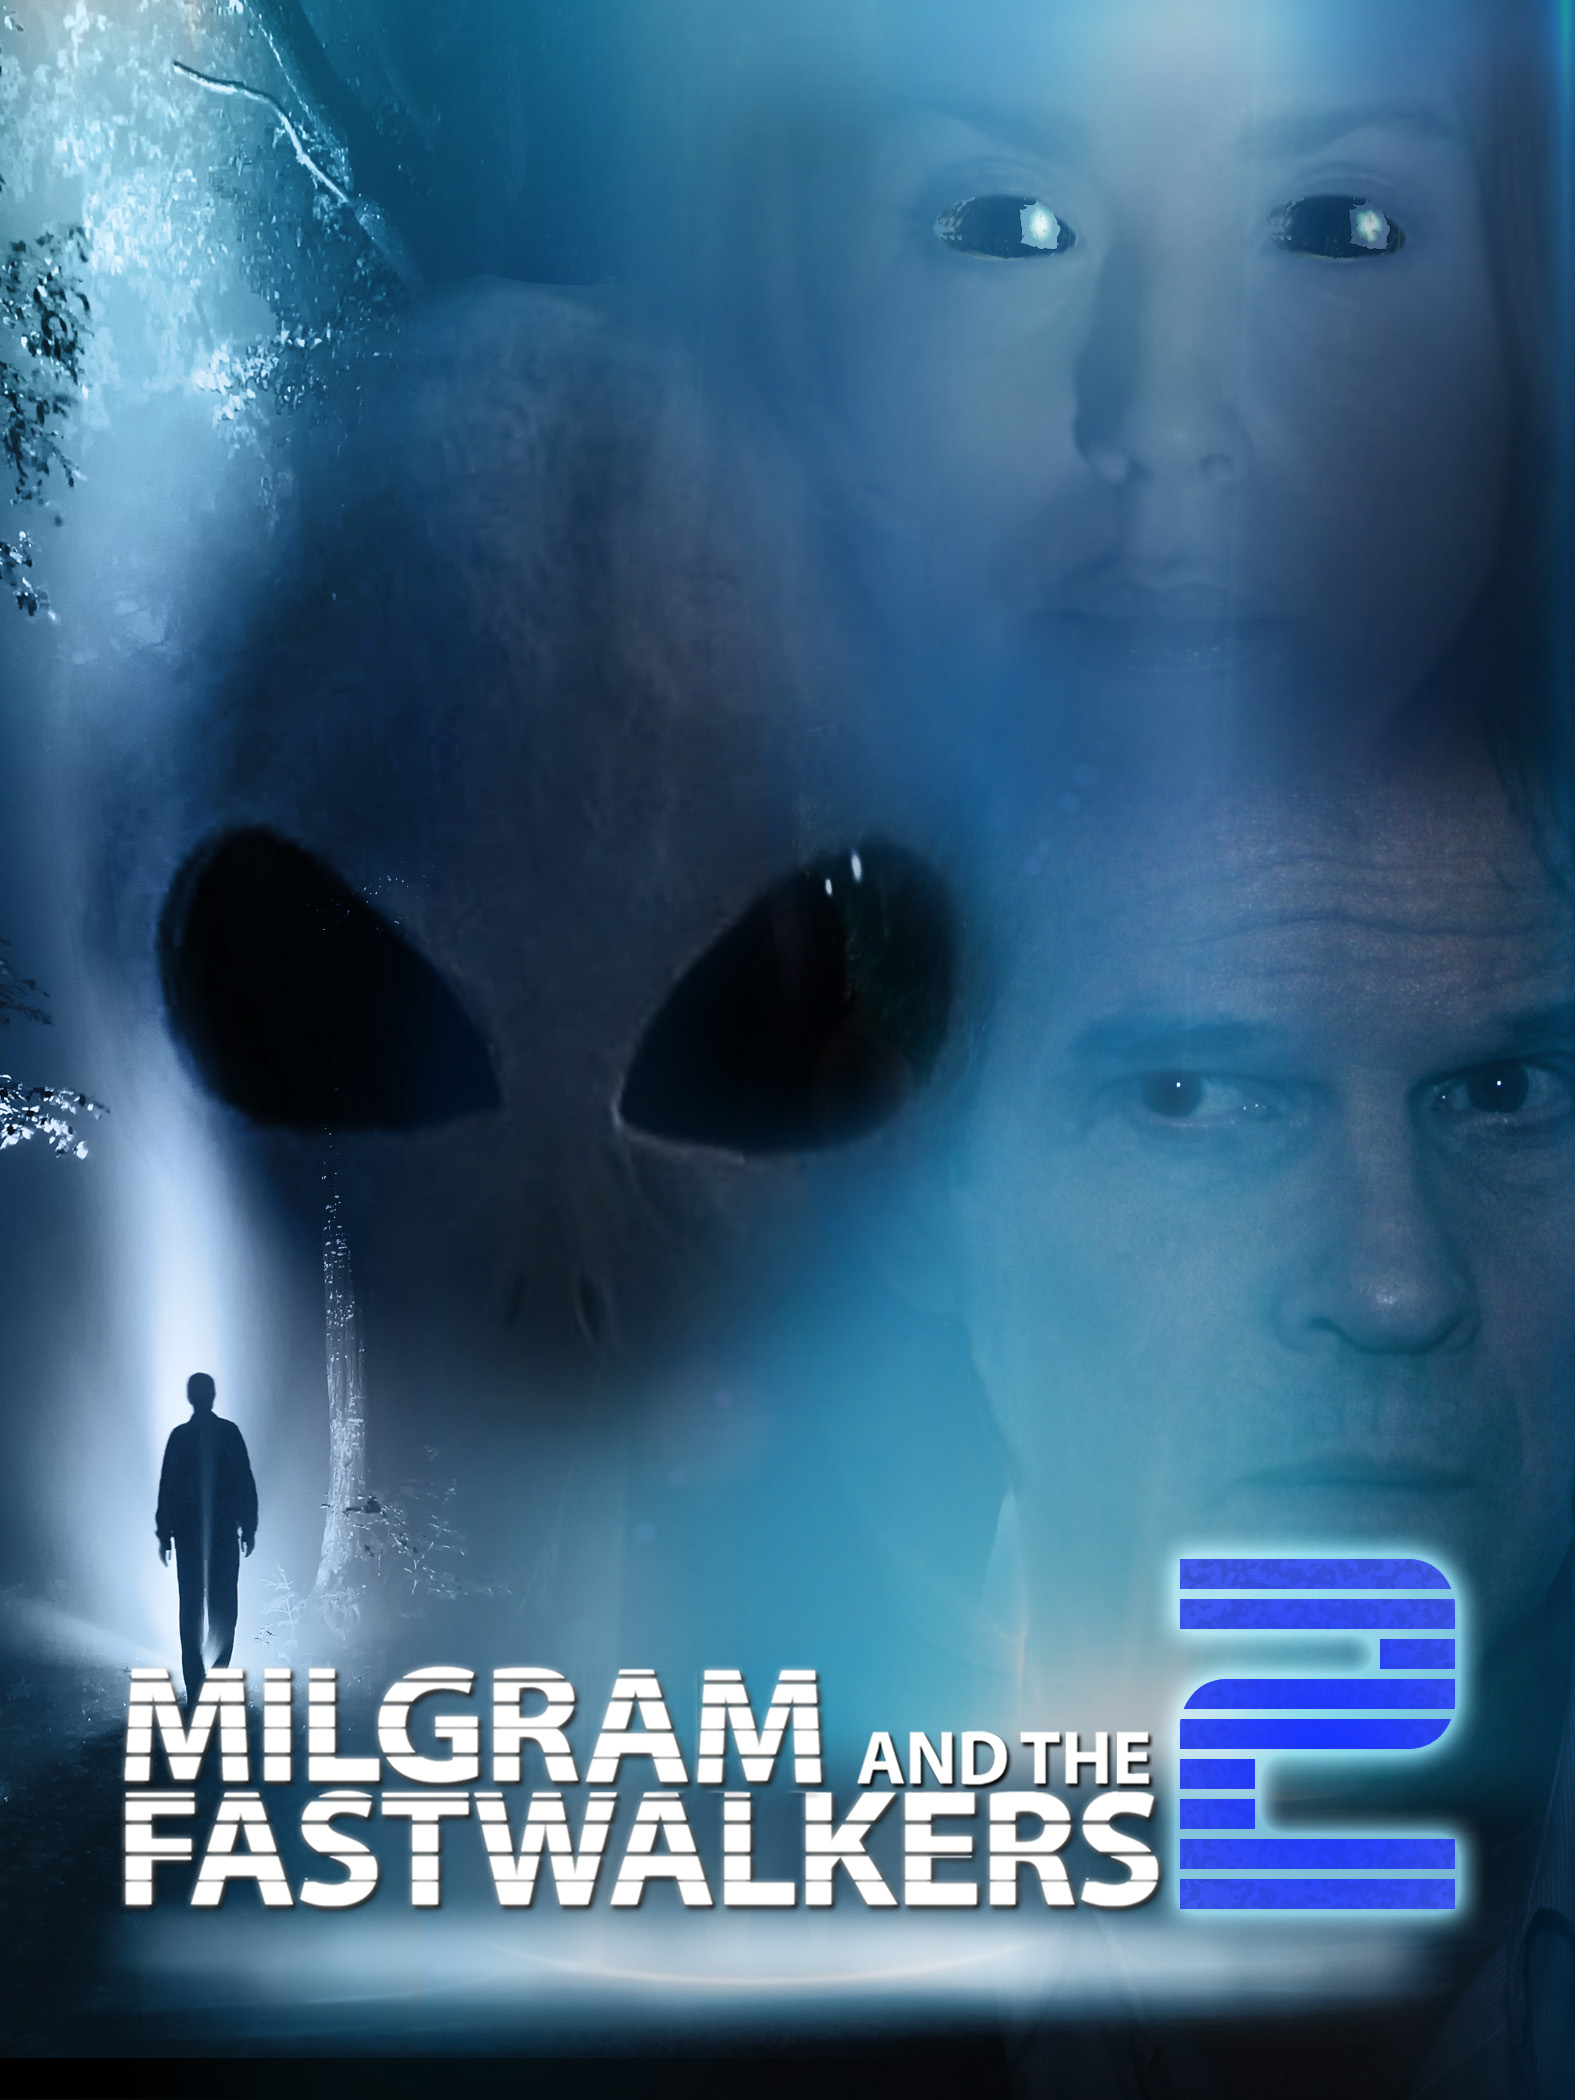 Milgram and the Fastwalkers 2 (2018)